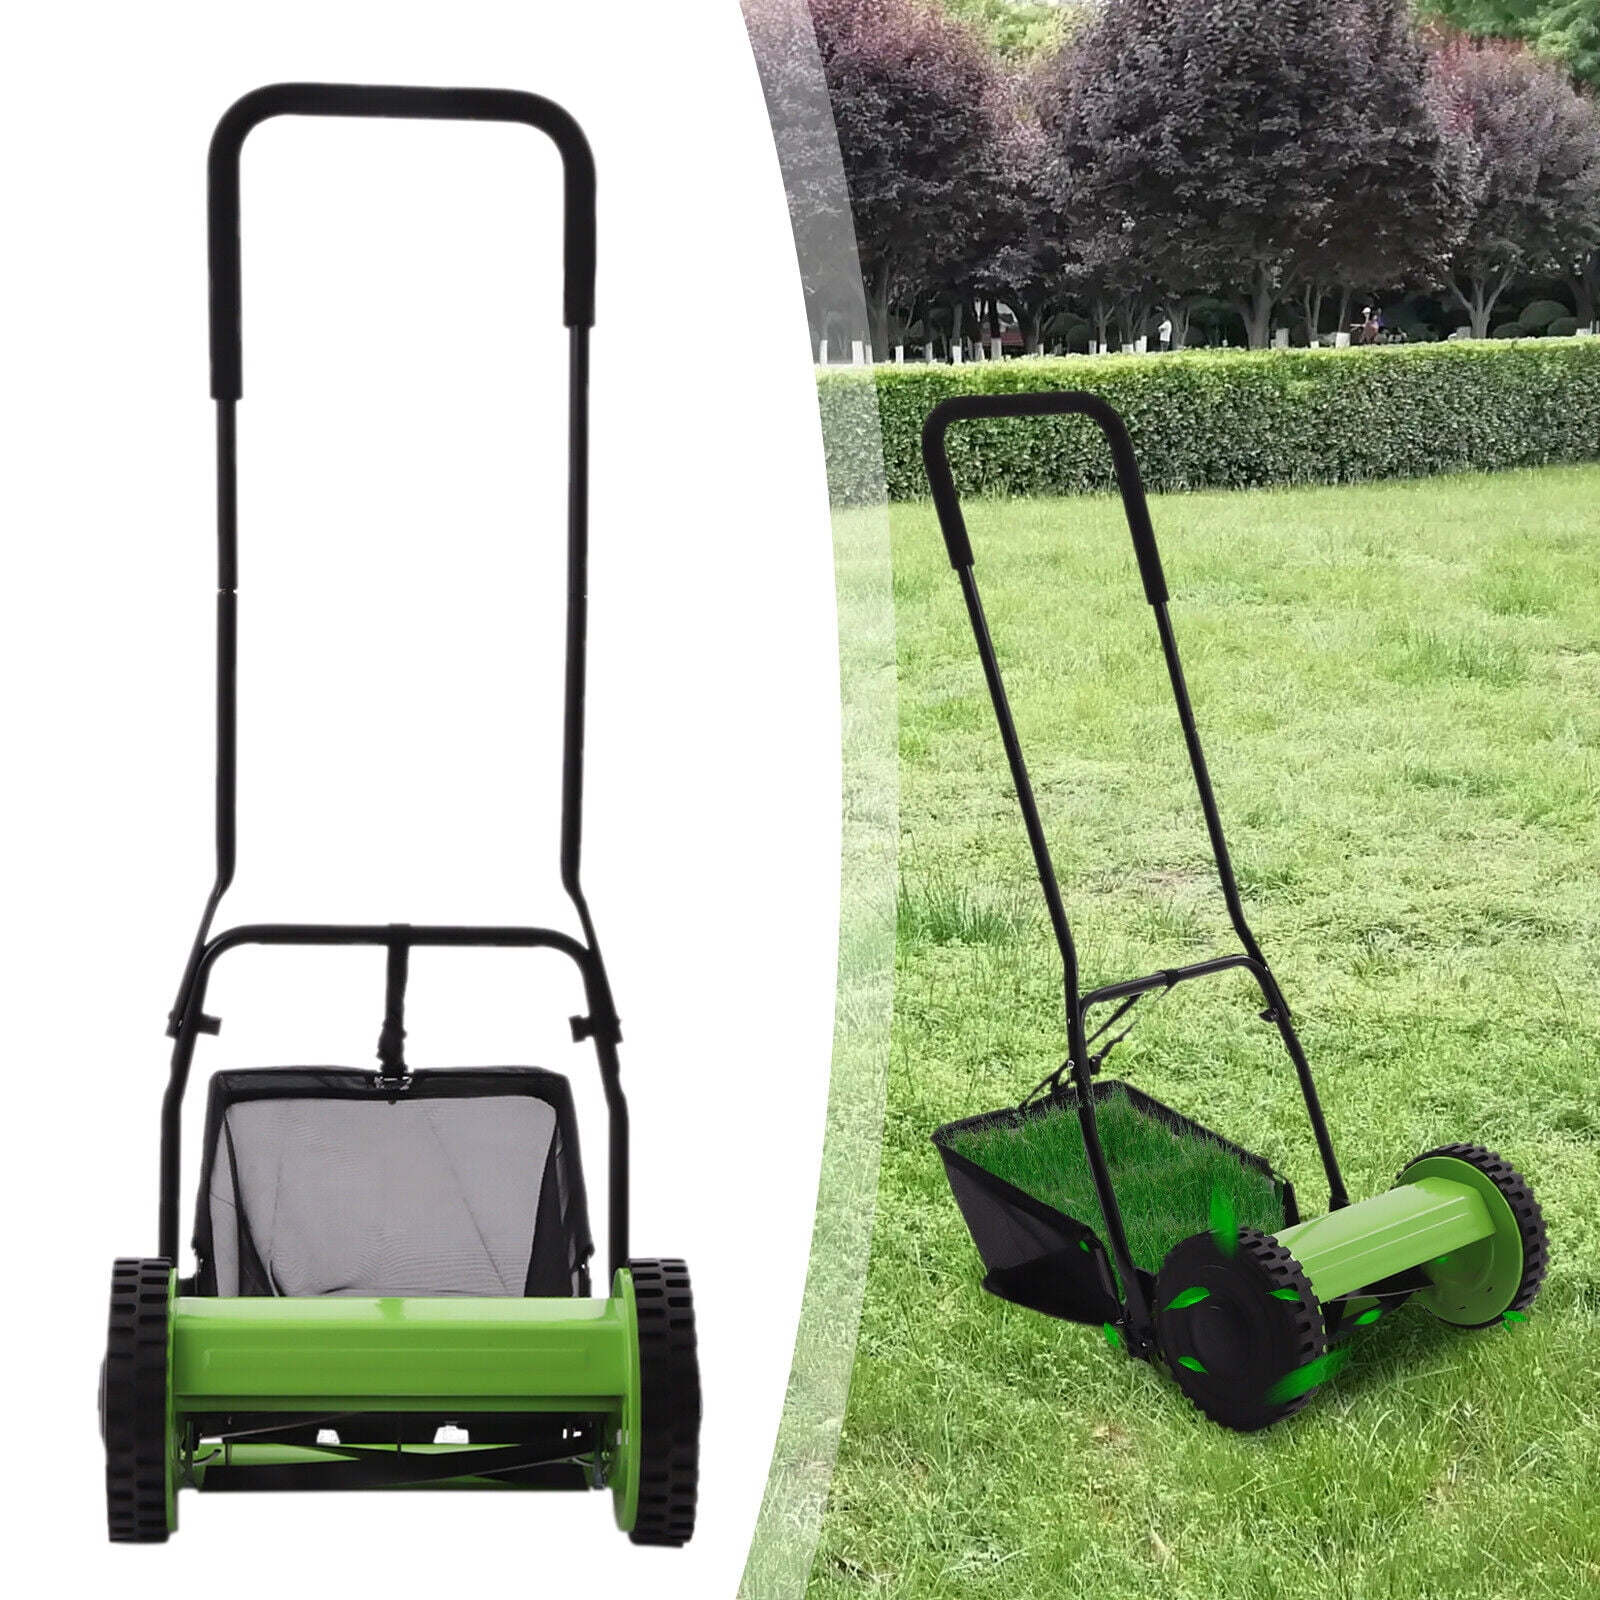 DENEST 12 Manual Lawn Mower Hand Push Walk-Behind Grass